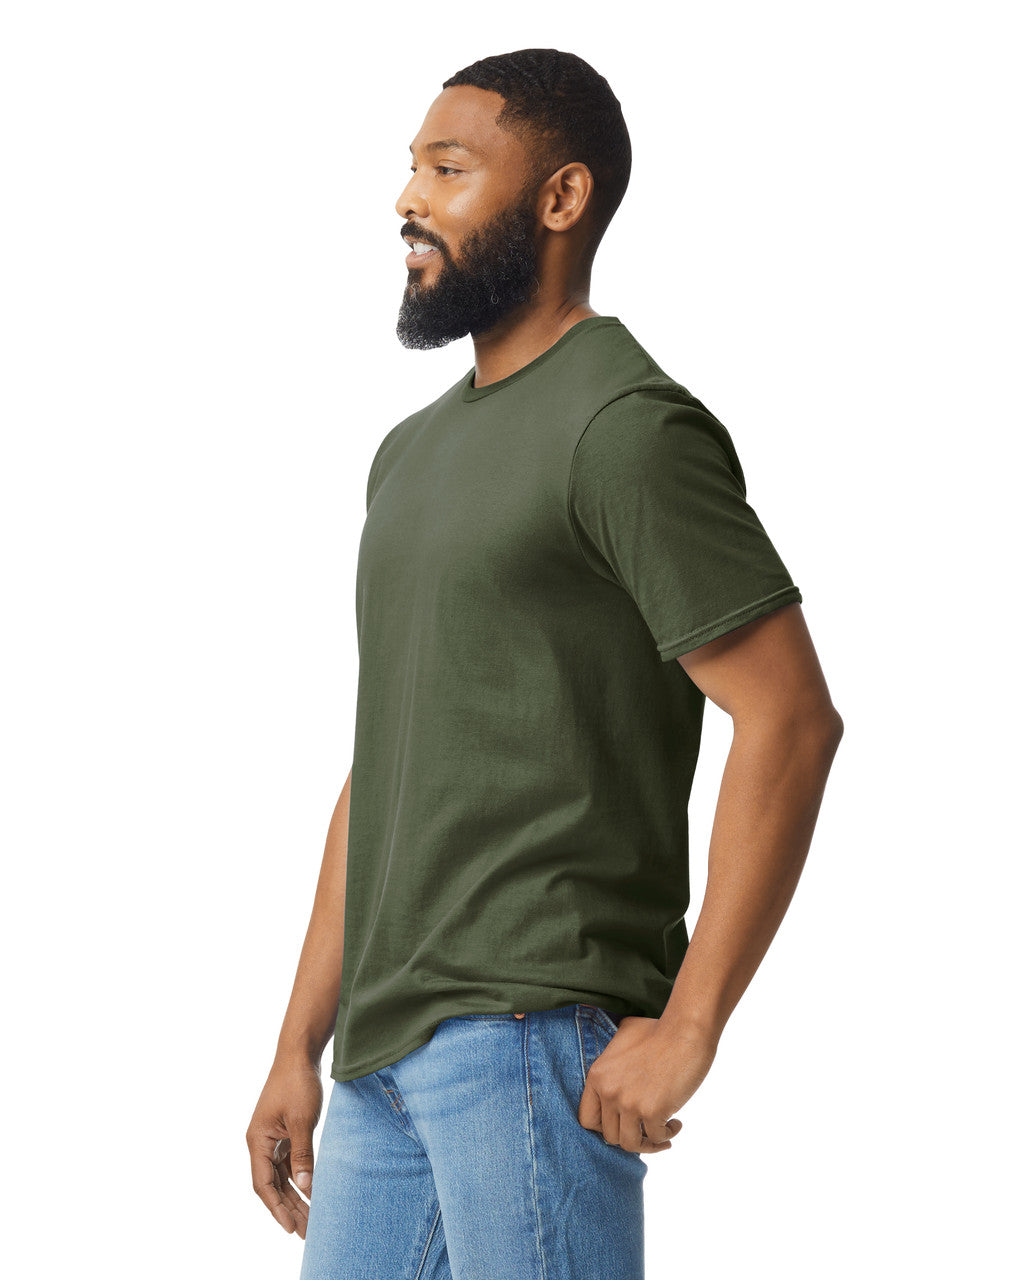 Camiseta Adulto Ring Spun Su Verde Militar Gildan Ref. 64000